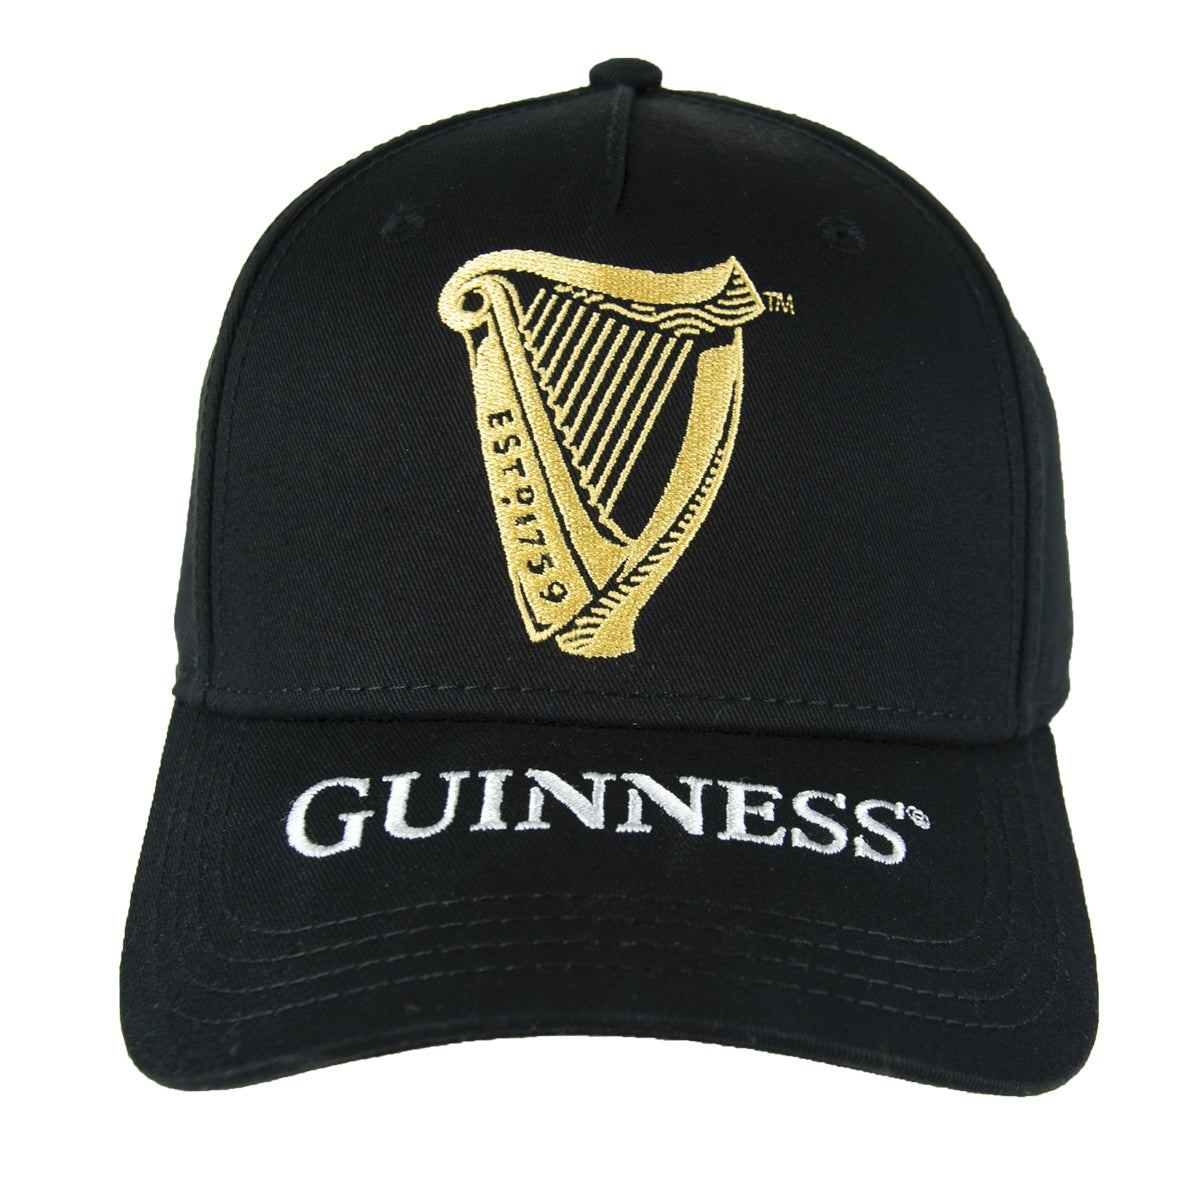 A black cotton Guinness Harp Baseball Cap.